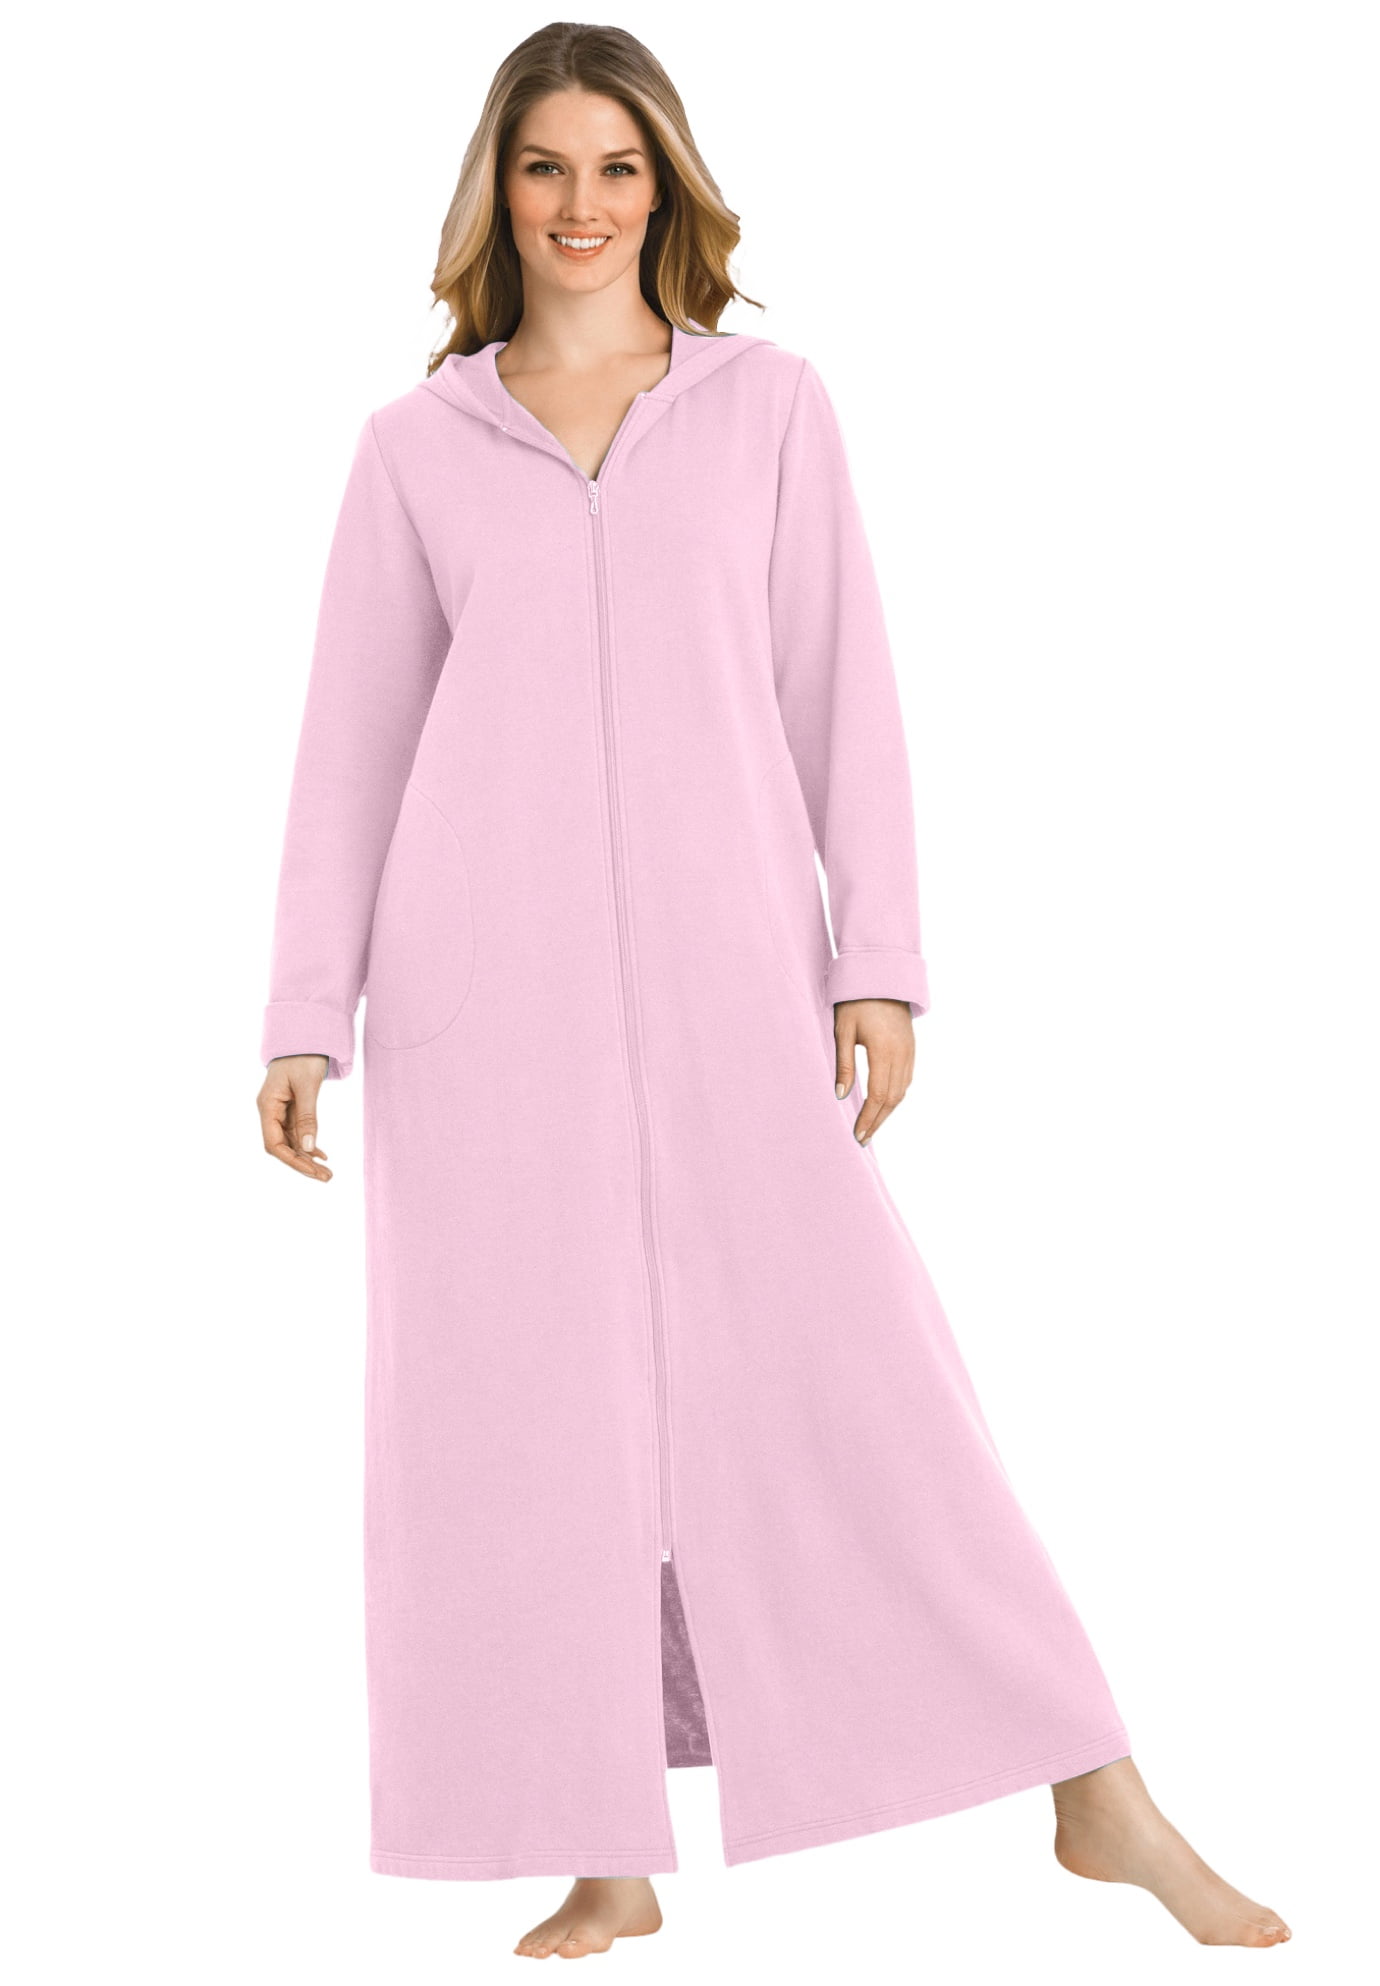 Dreams & Co Womens Plus Size Drape Front Robe 